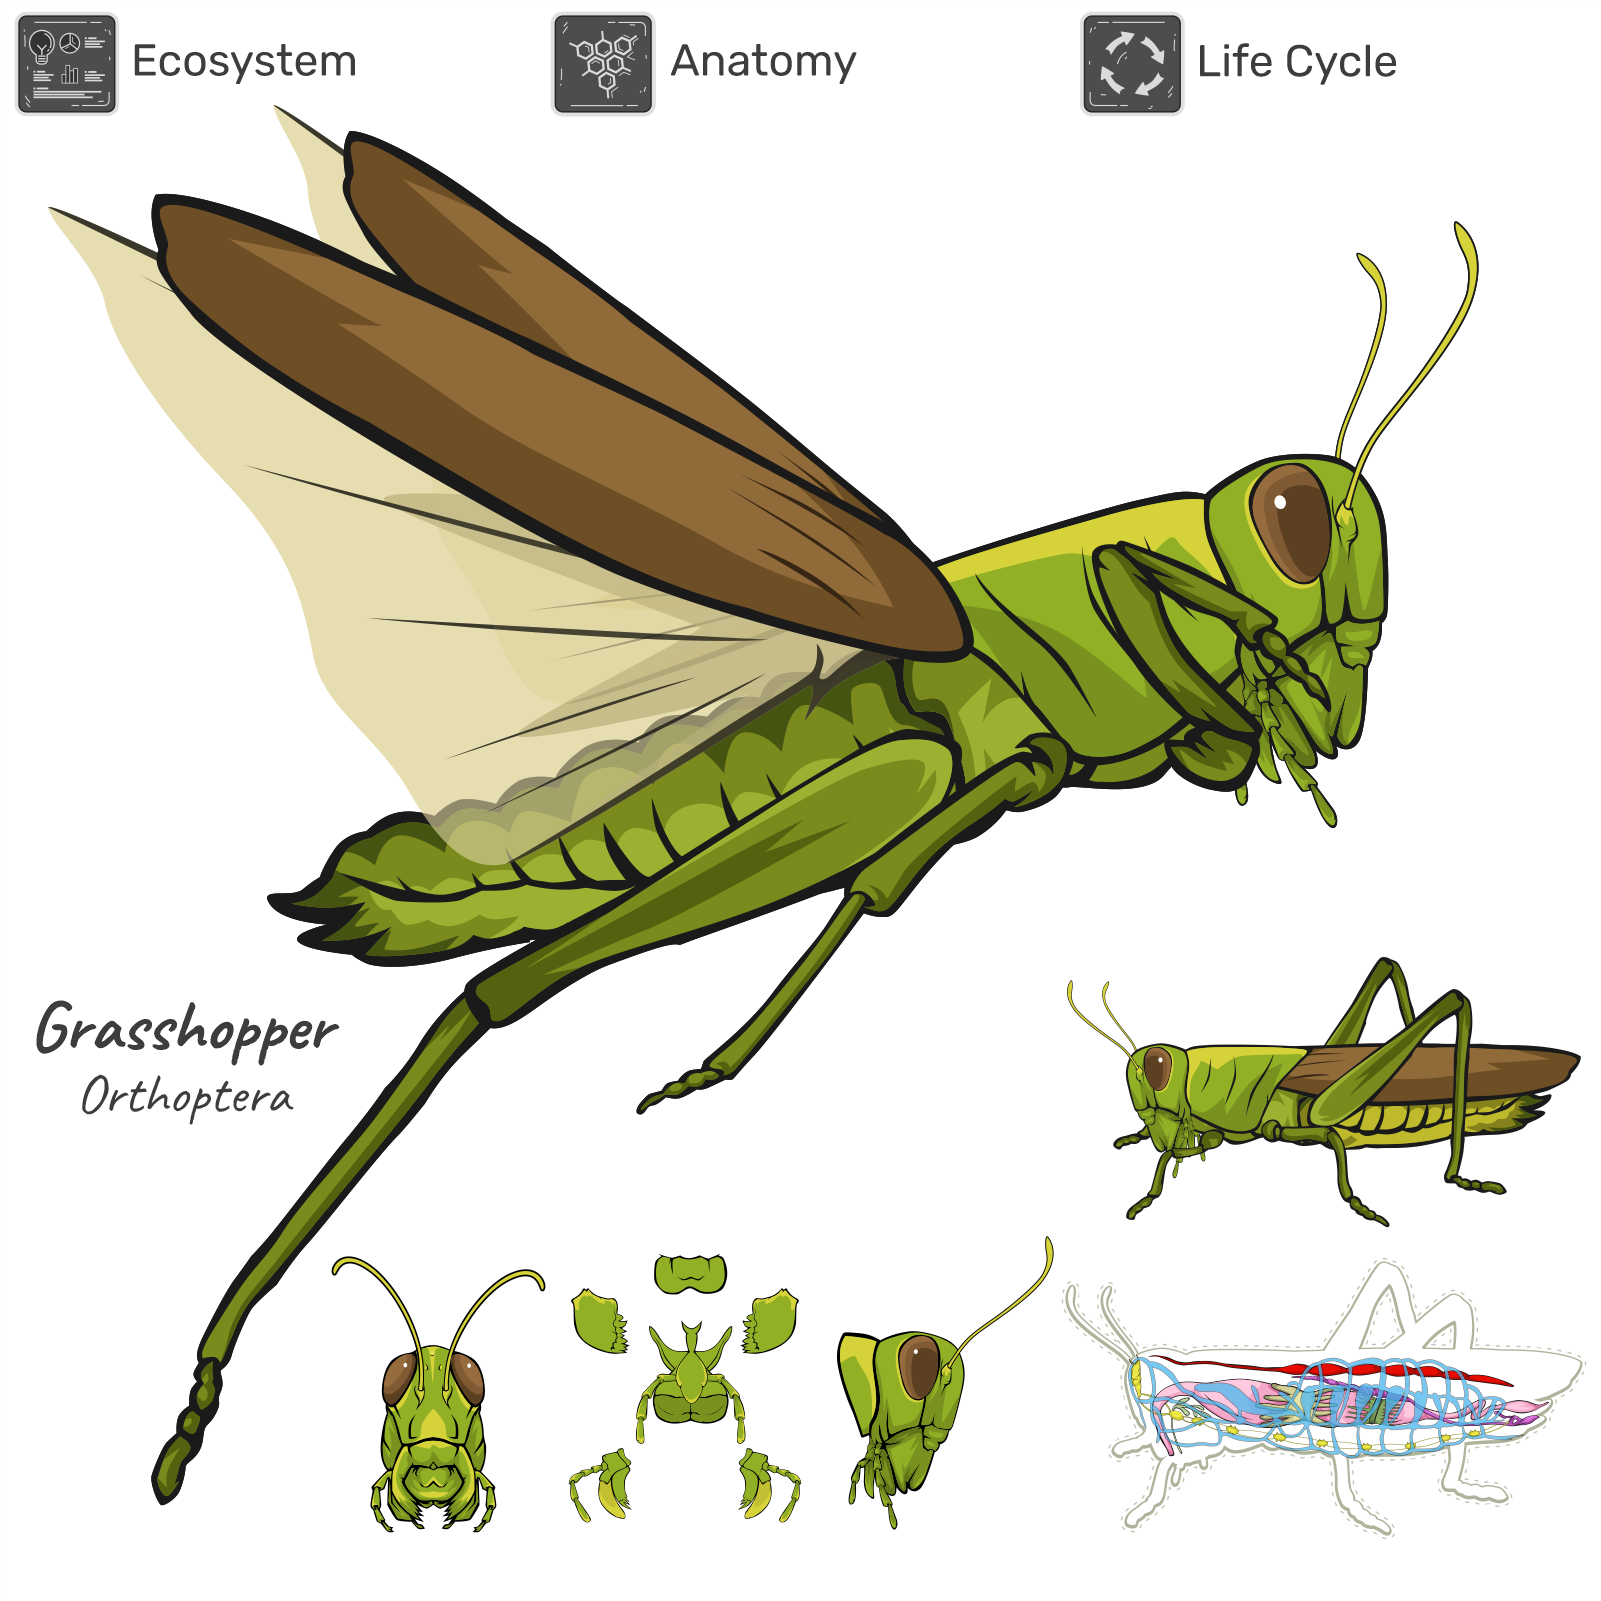 grasshopper life cycle